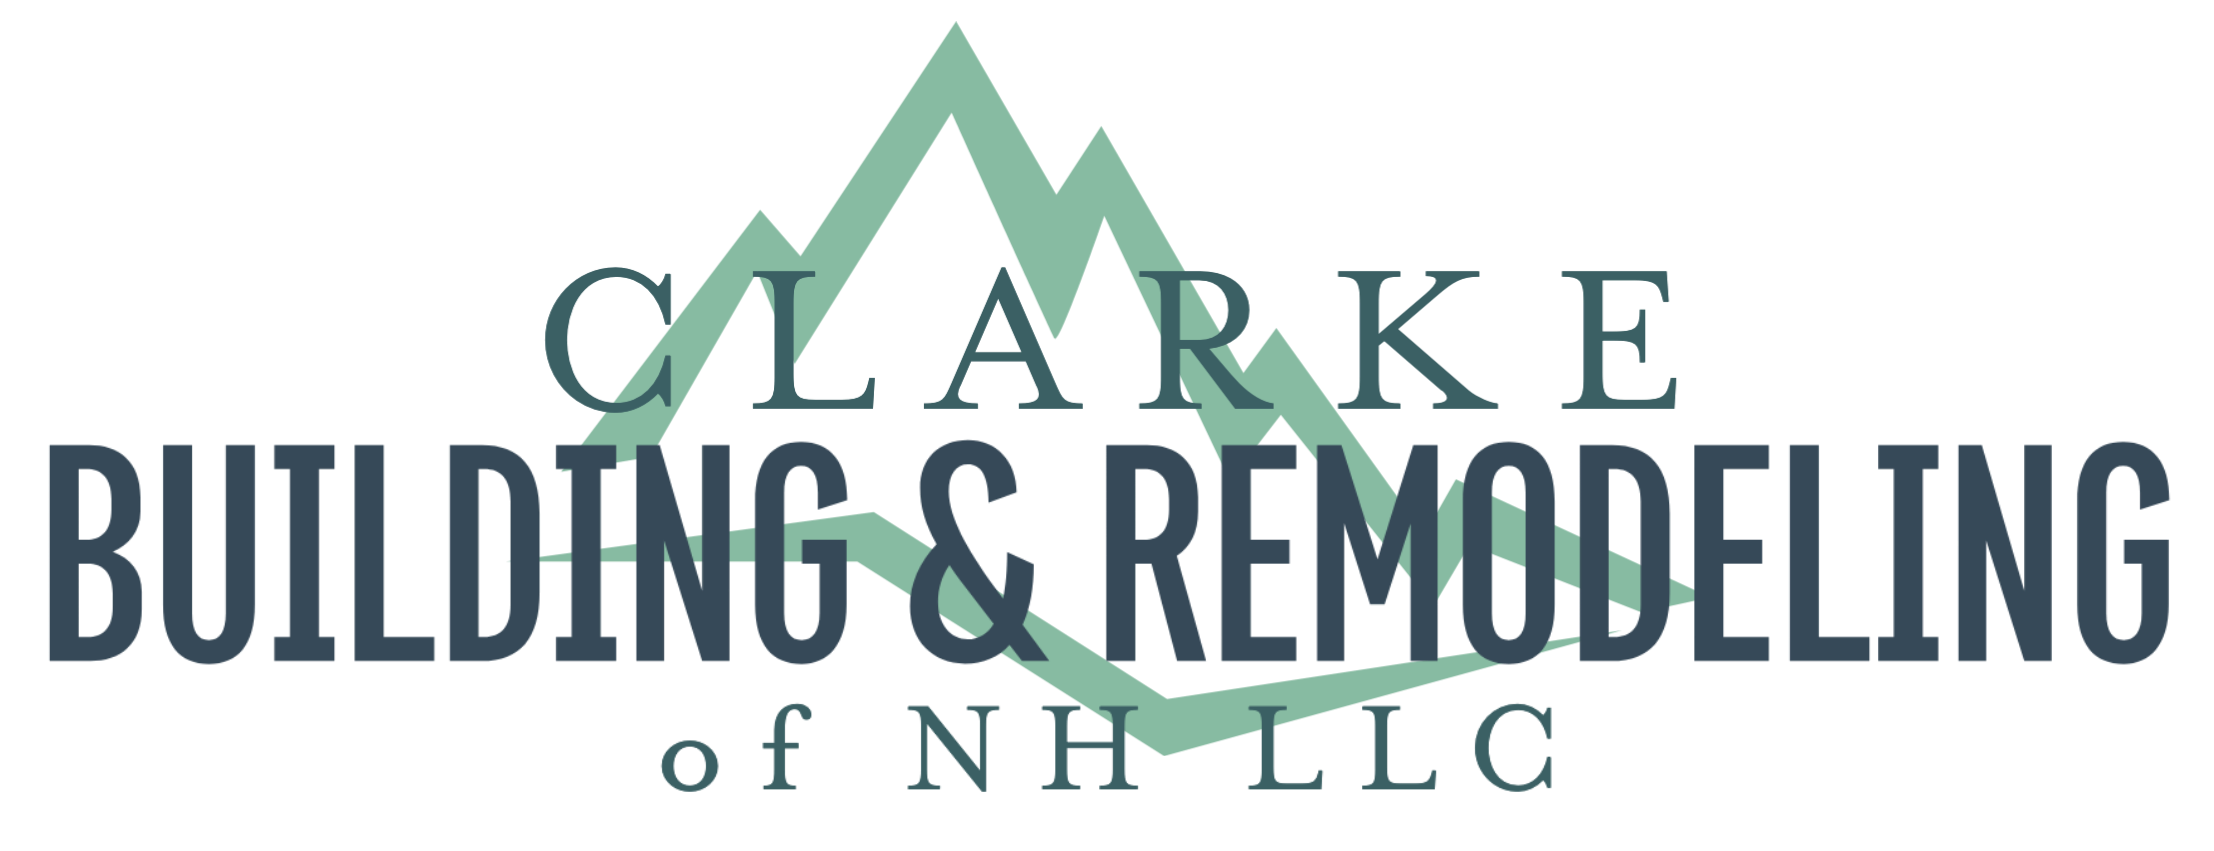 Clarke Building & Remodeling of NH LLC logo